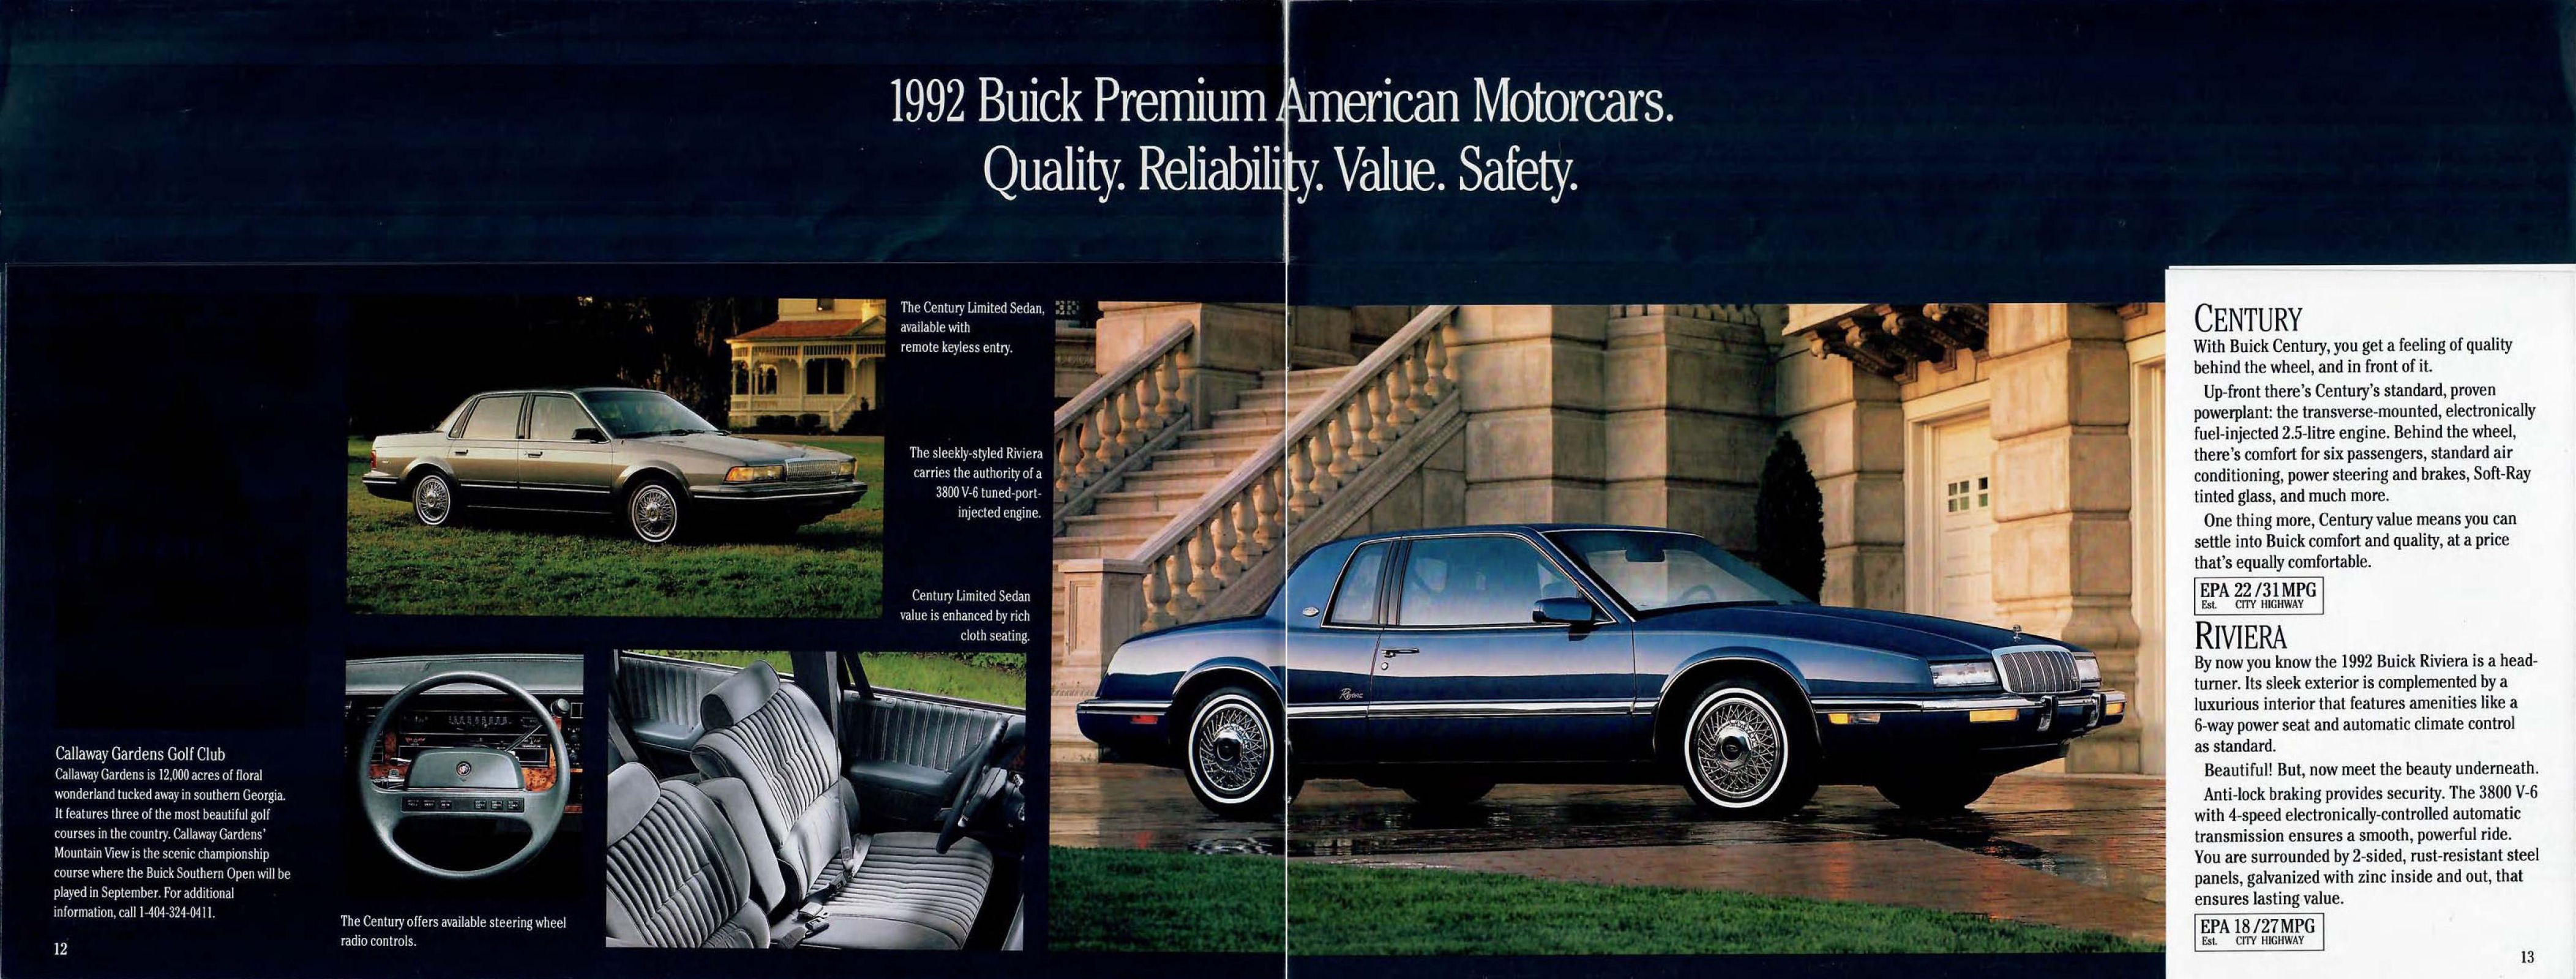 1992 Buick Full Line Handout-12-13